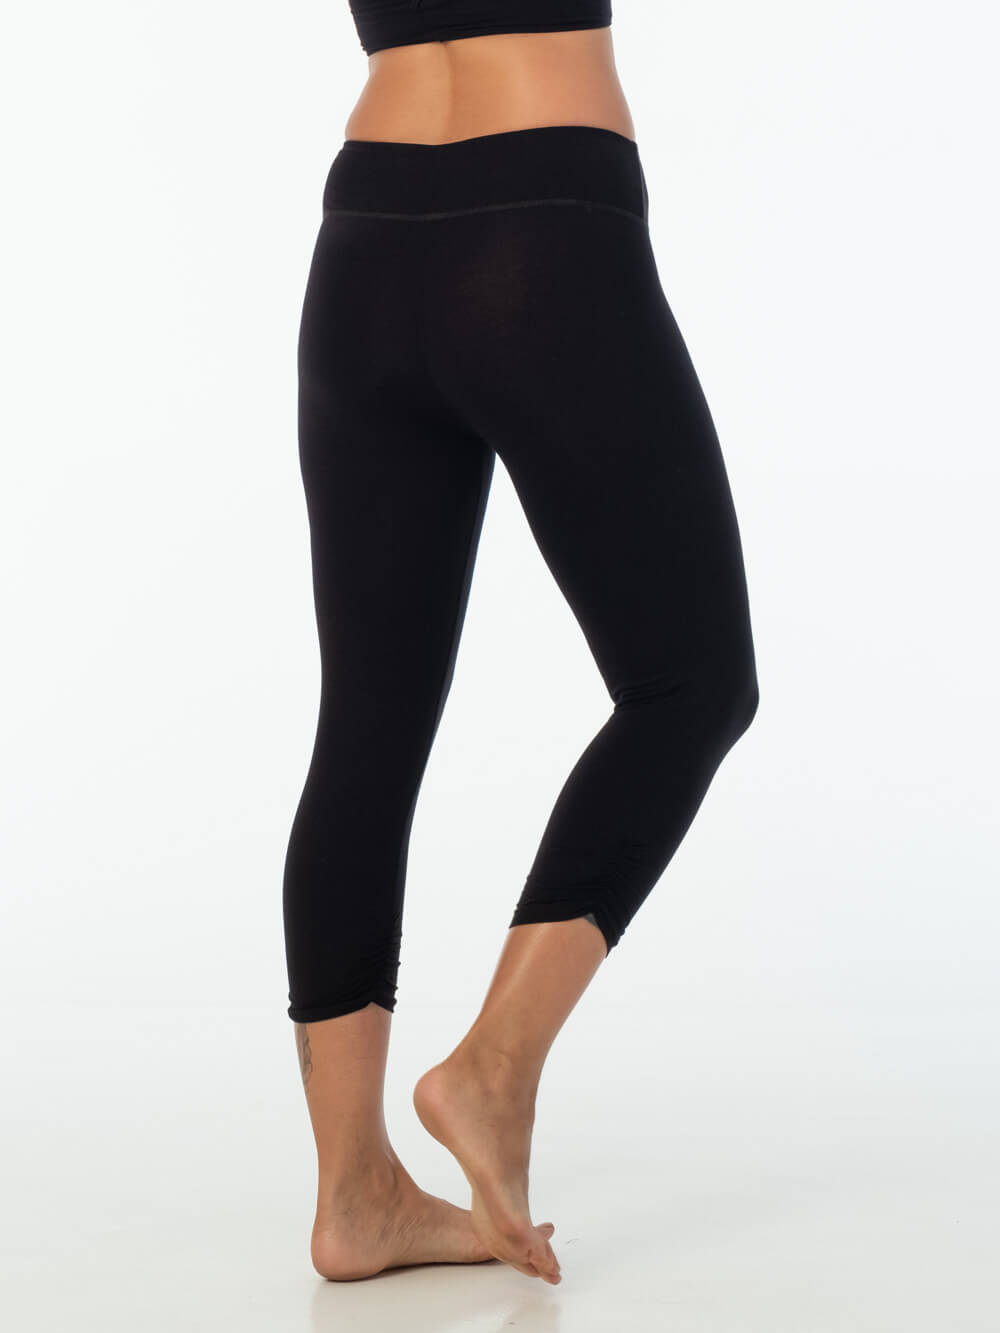 Stretchy & Textured Capri Leggings | Women's Plant Based Activewear ...